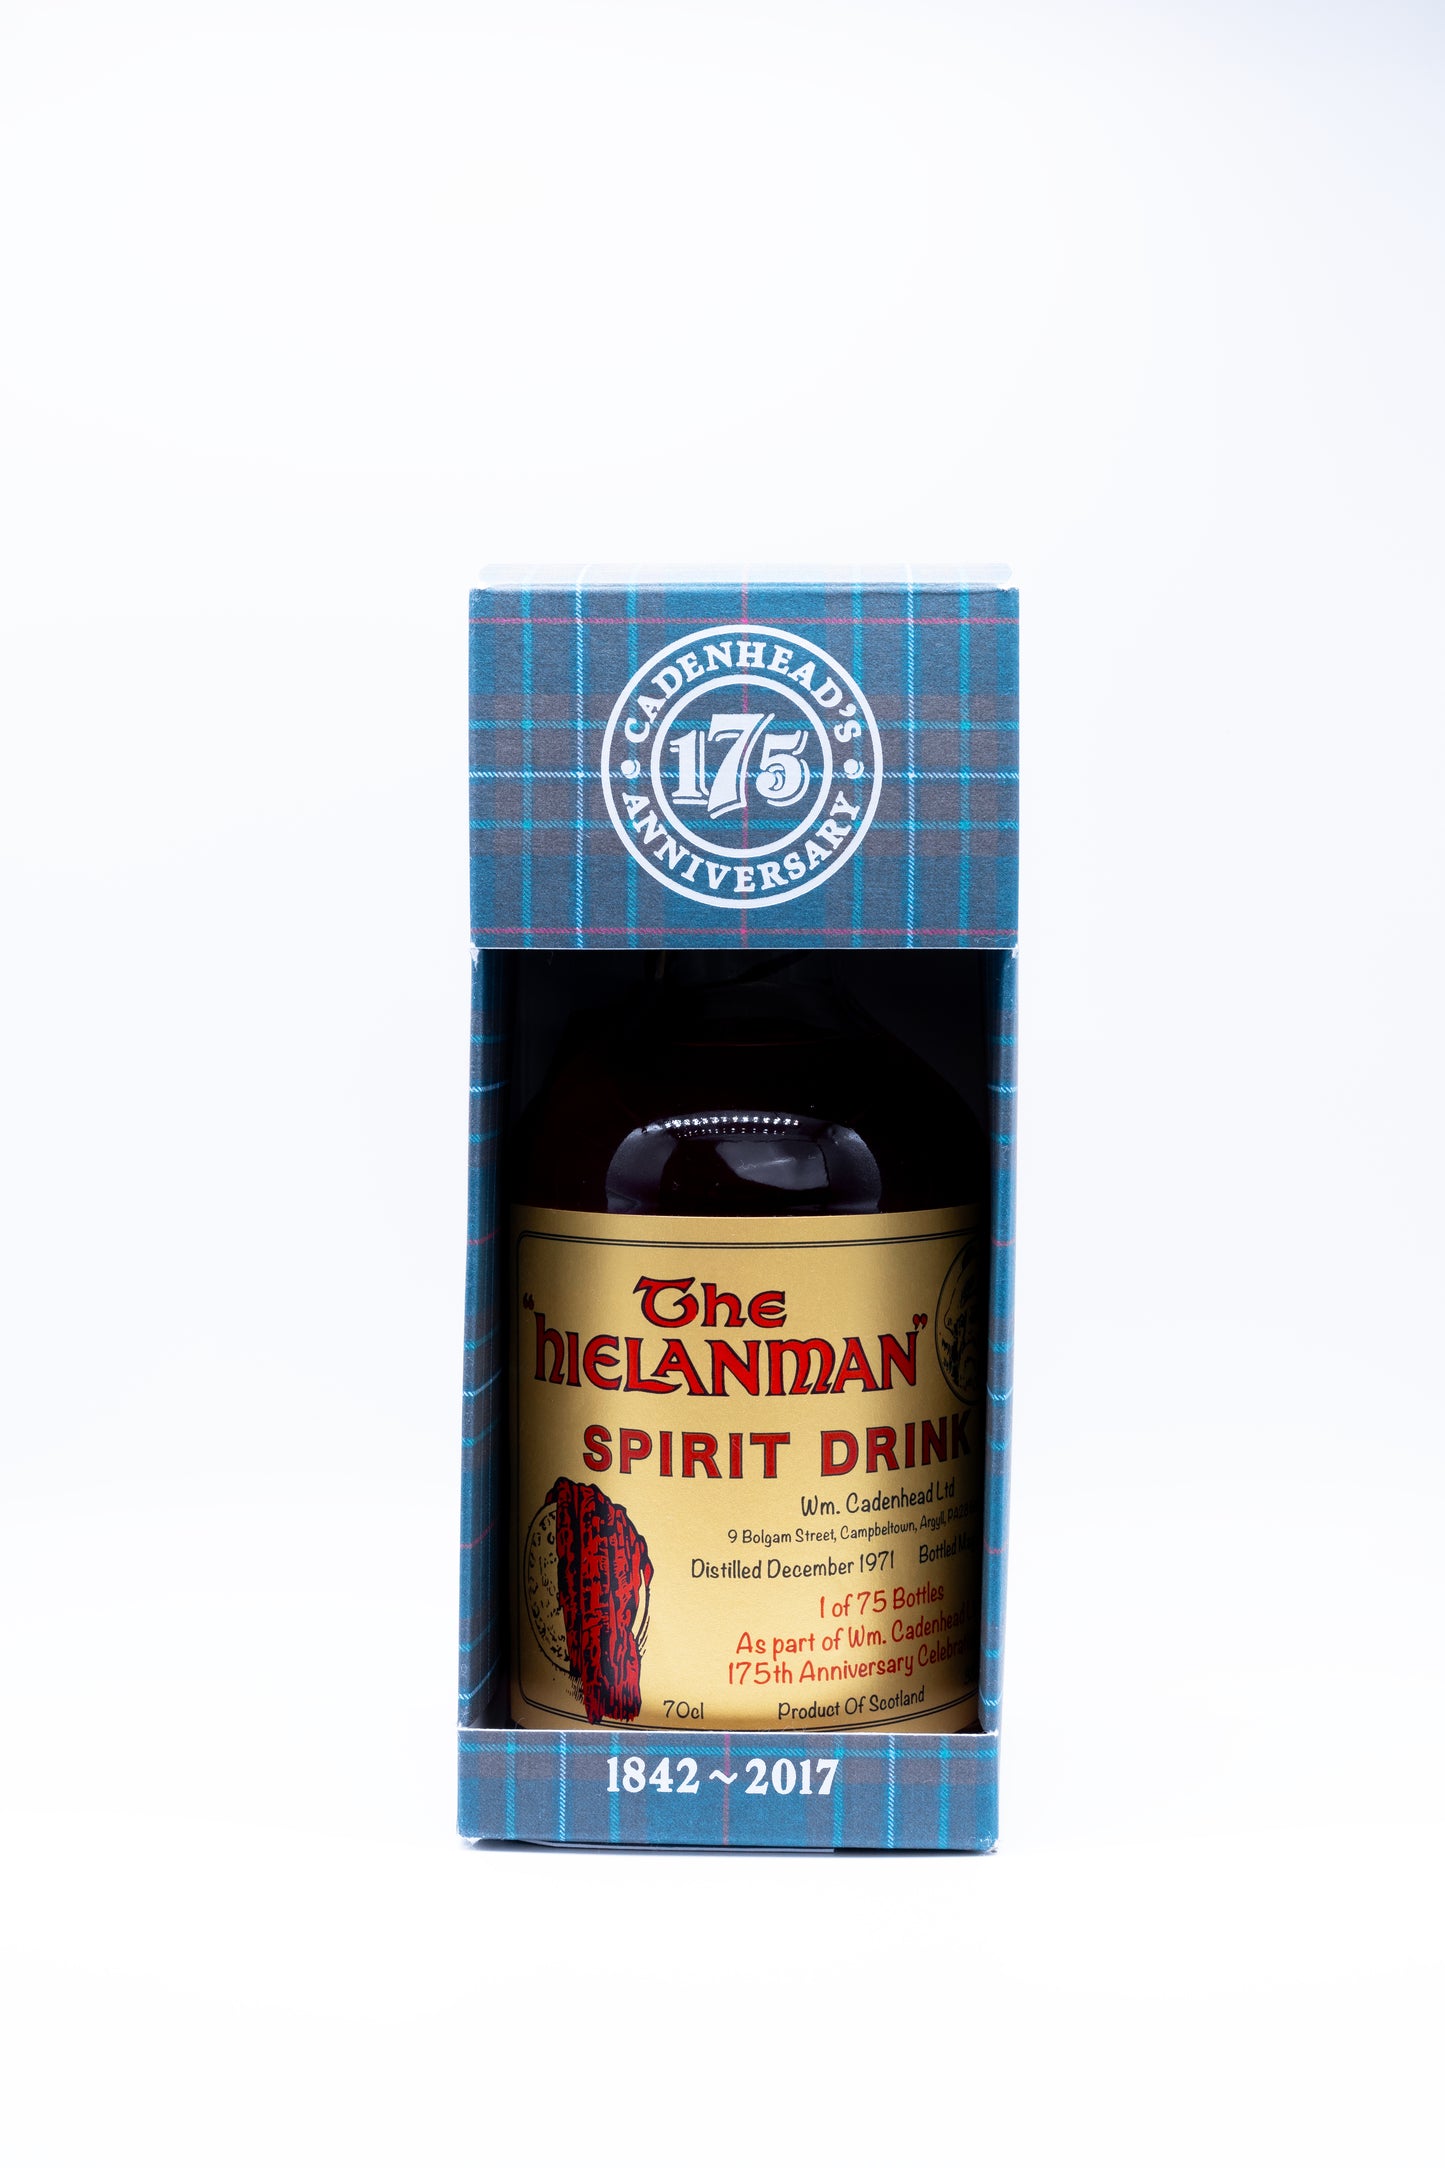 Glenfarclas-  The Hielanman - Spirit Drink  45 Year olds -CadenHead's 175 Anniversary